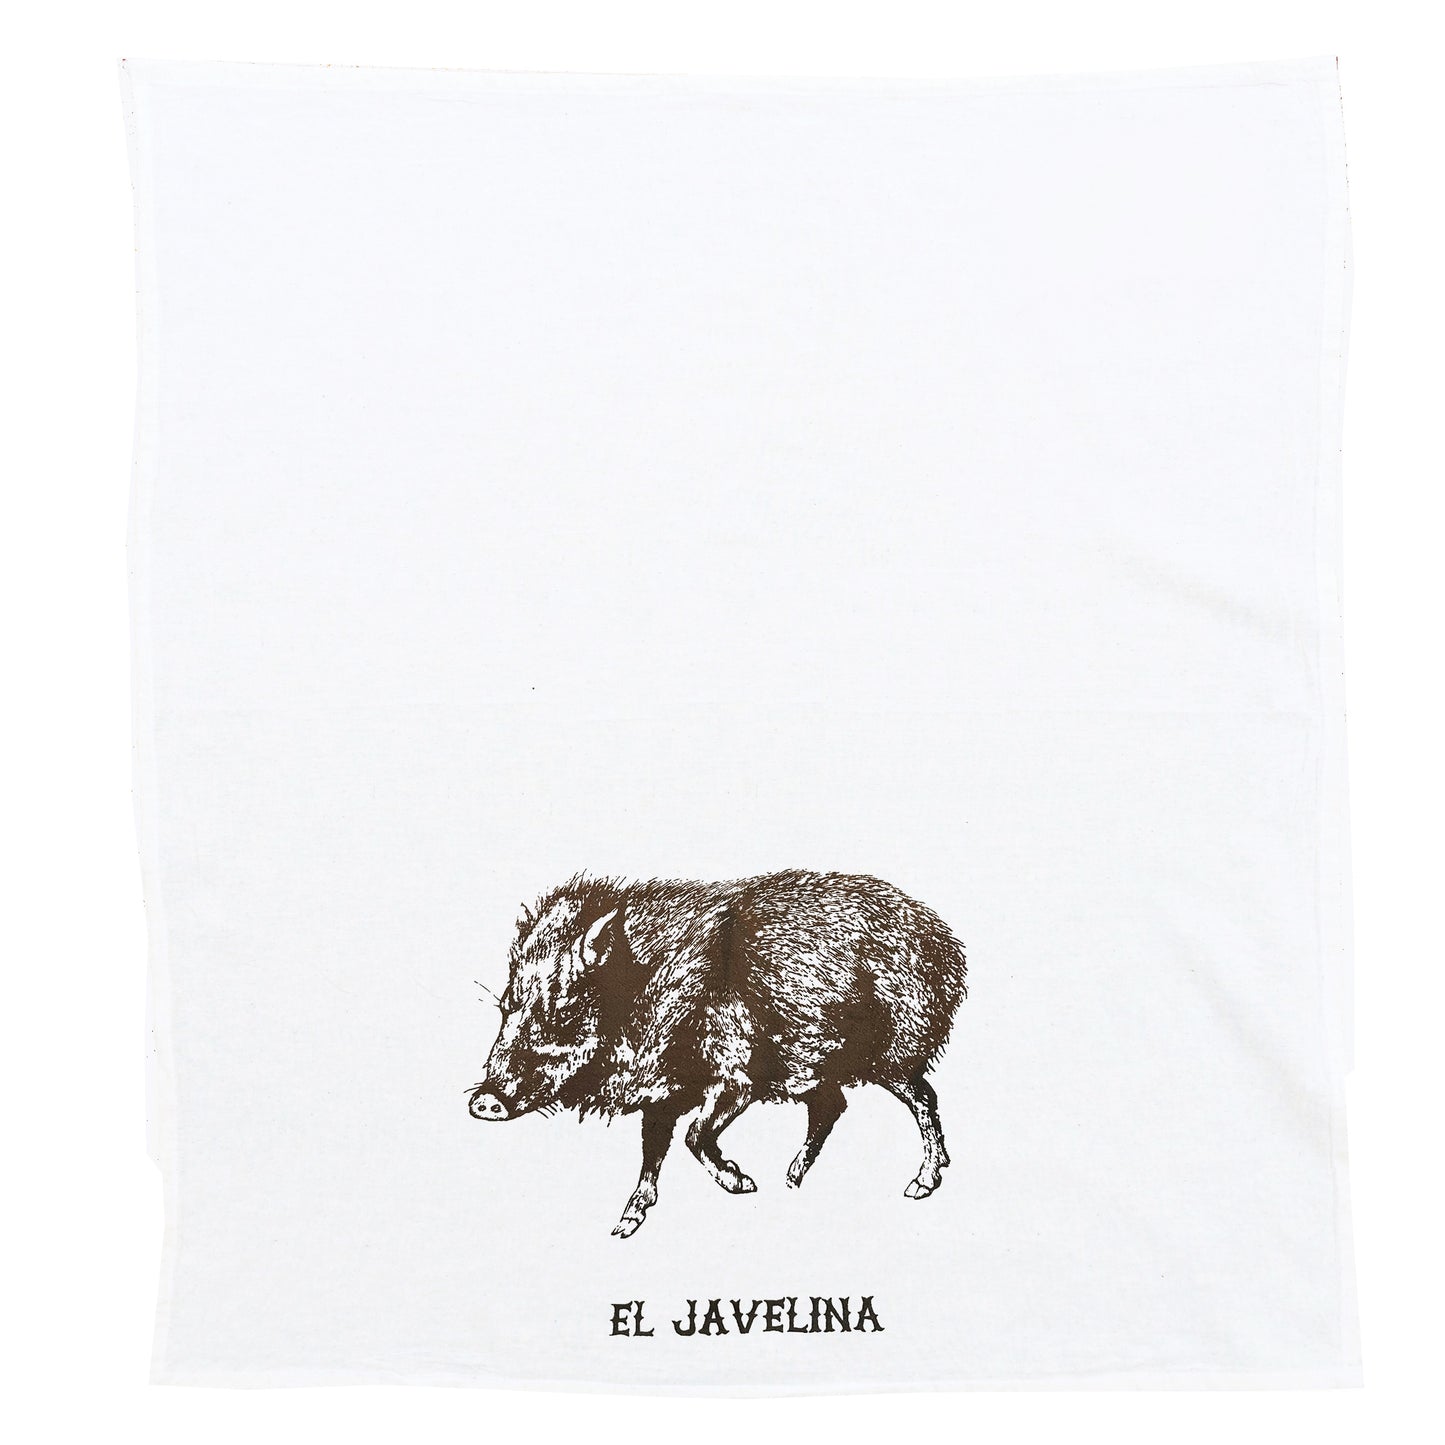 El Javelina towel